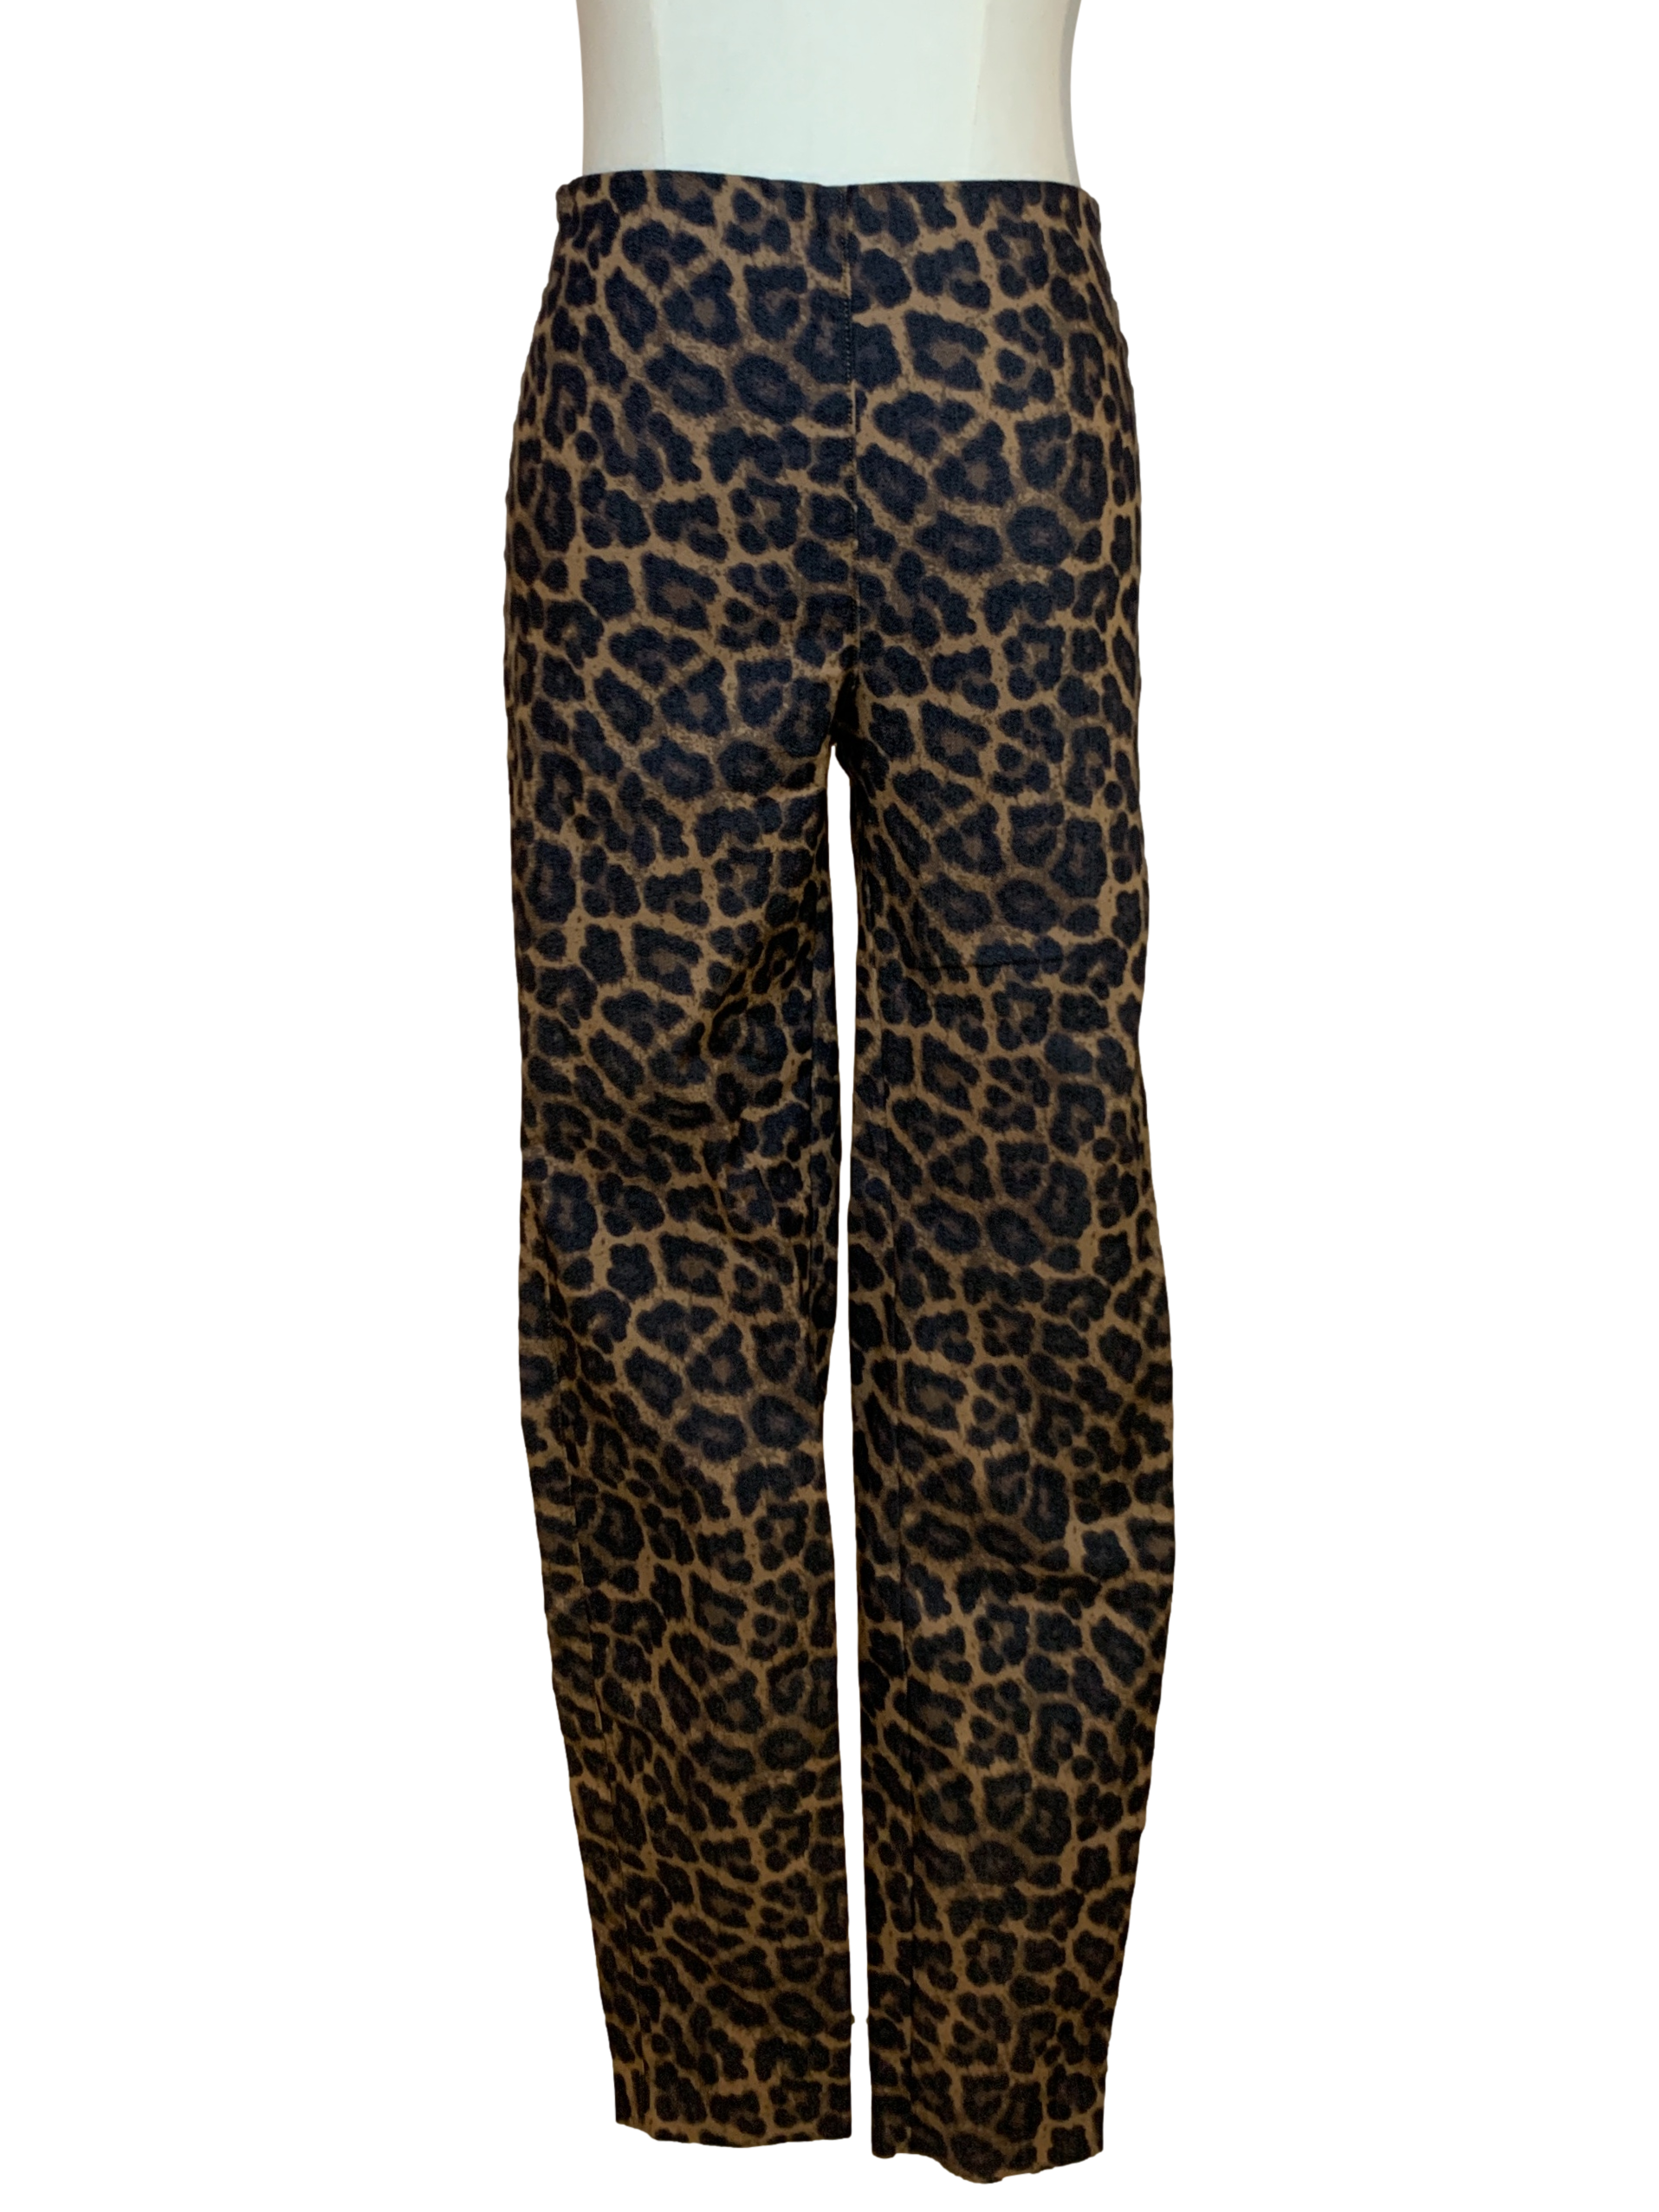 Leopard Skinny Pants